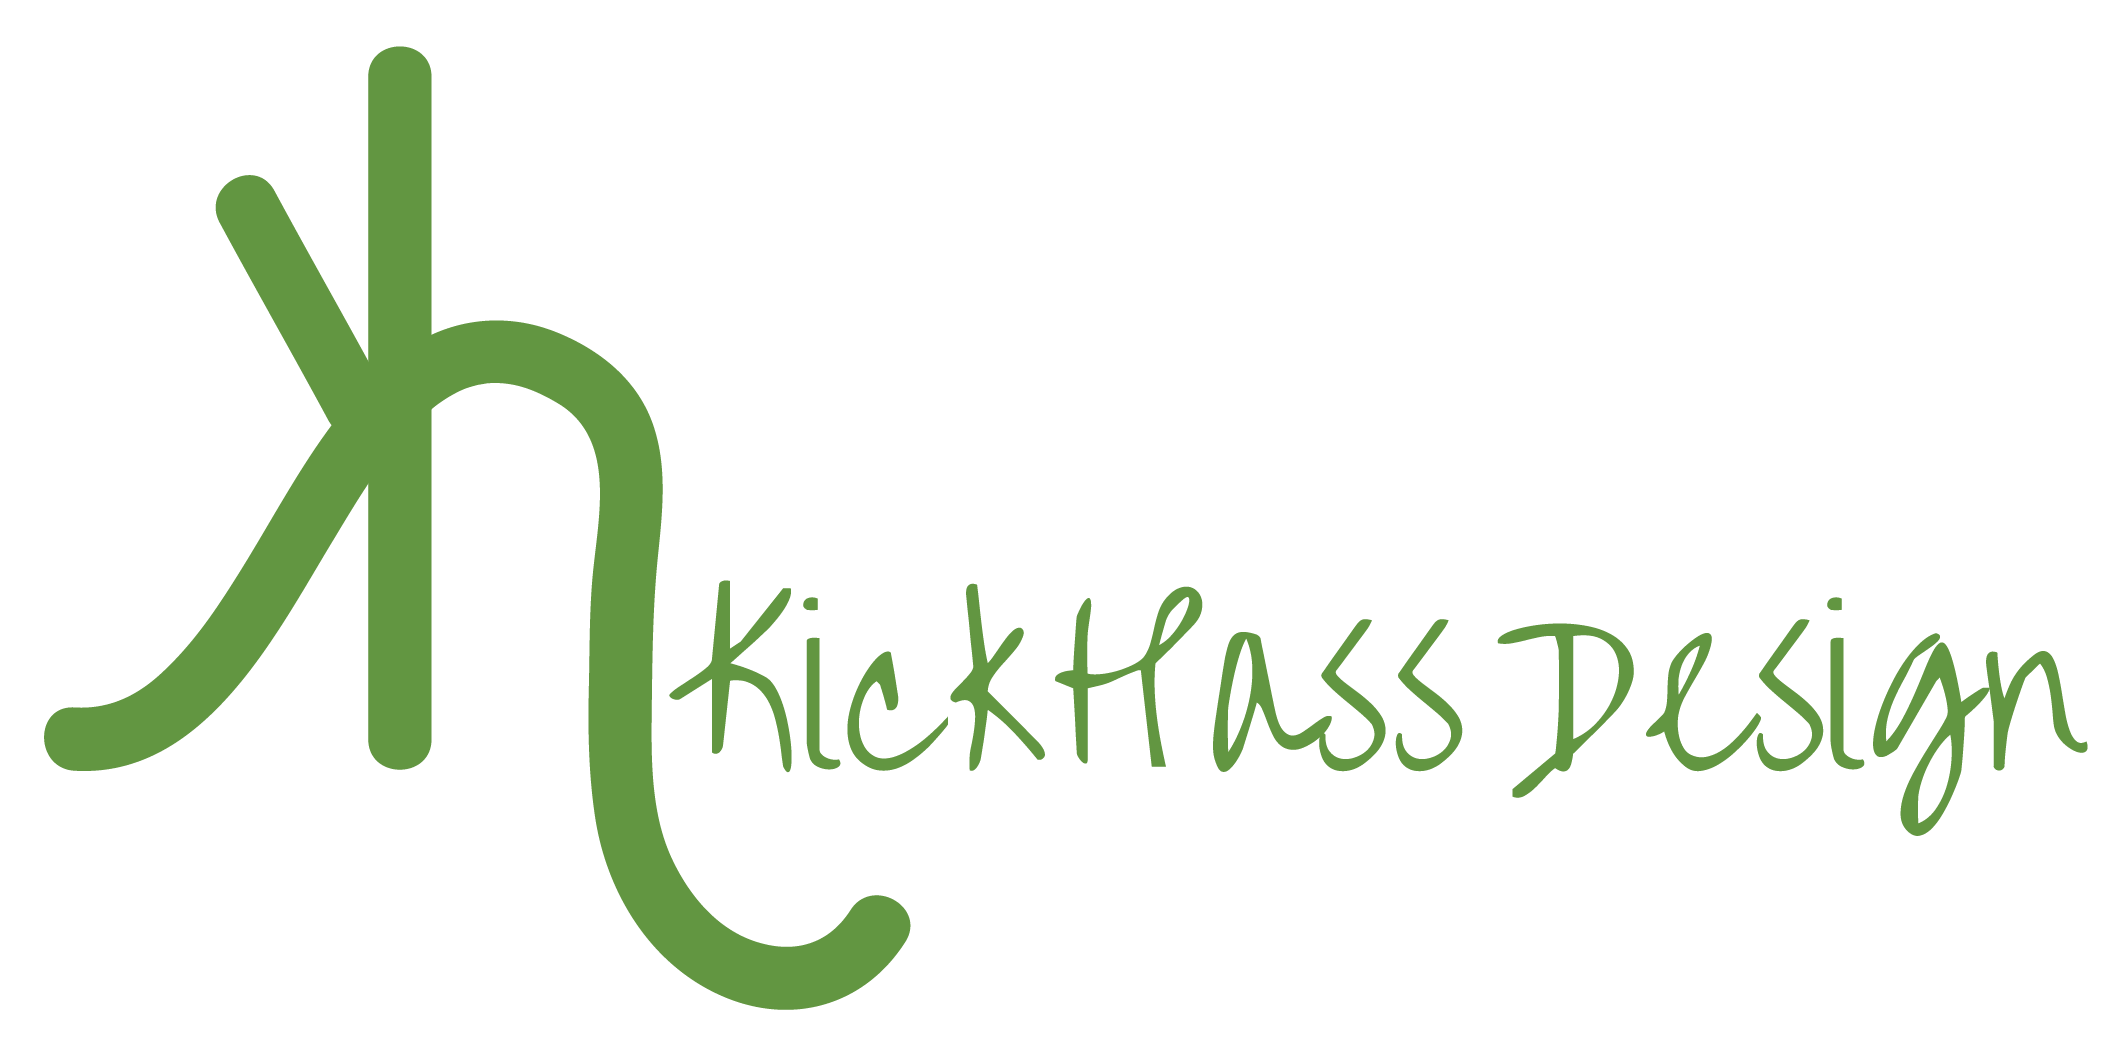 KickHass Logo